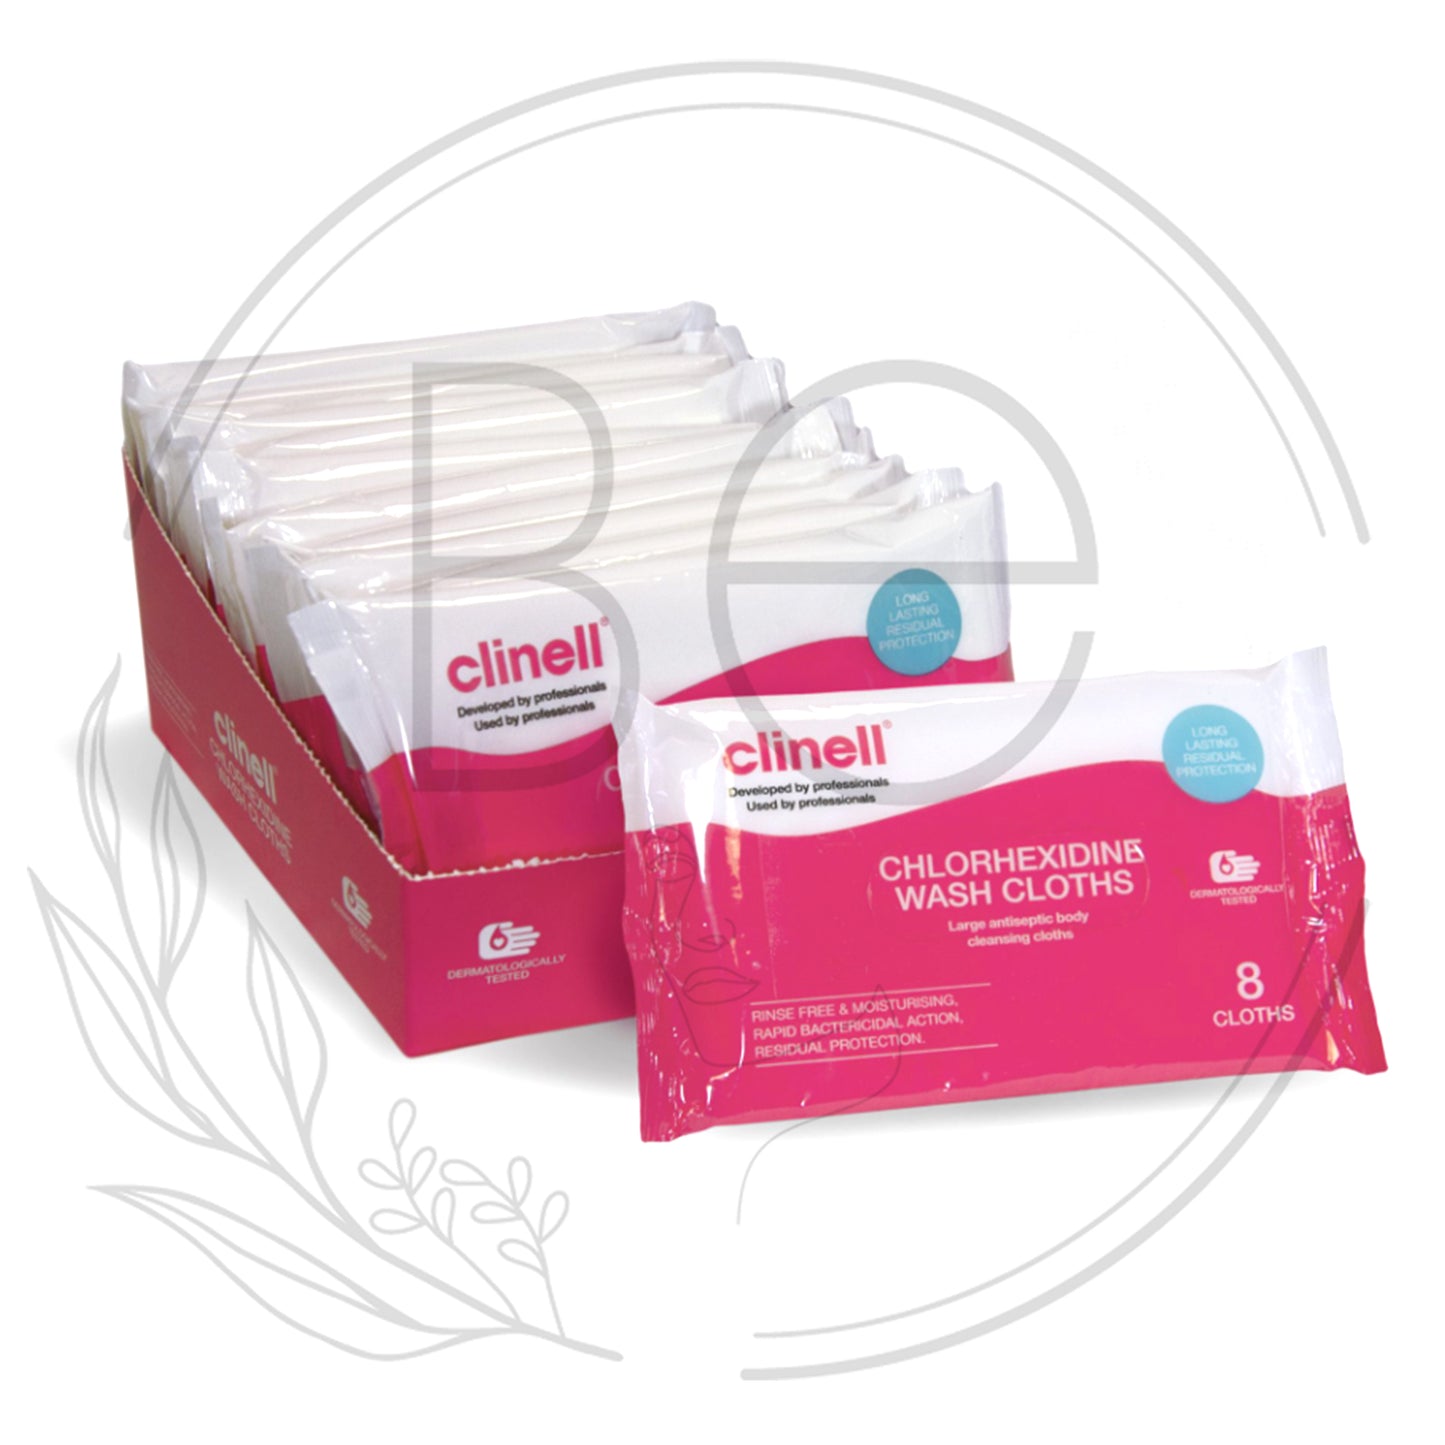 Clinell Chlorhexidine Wash Cloths - 8 Cloths